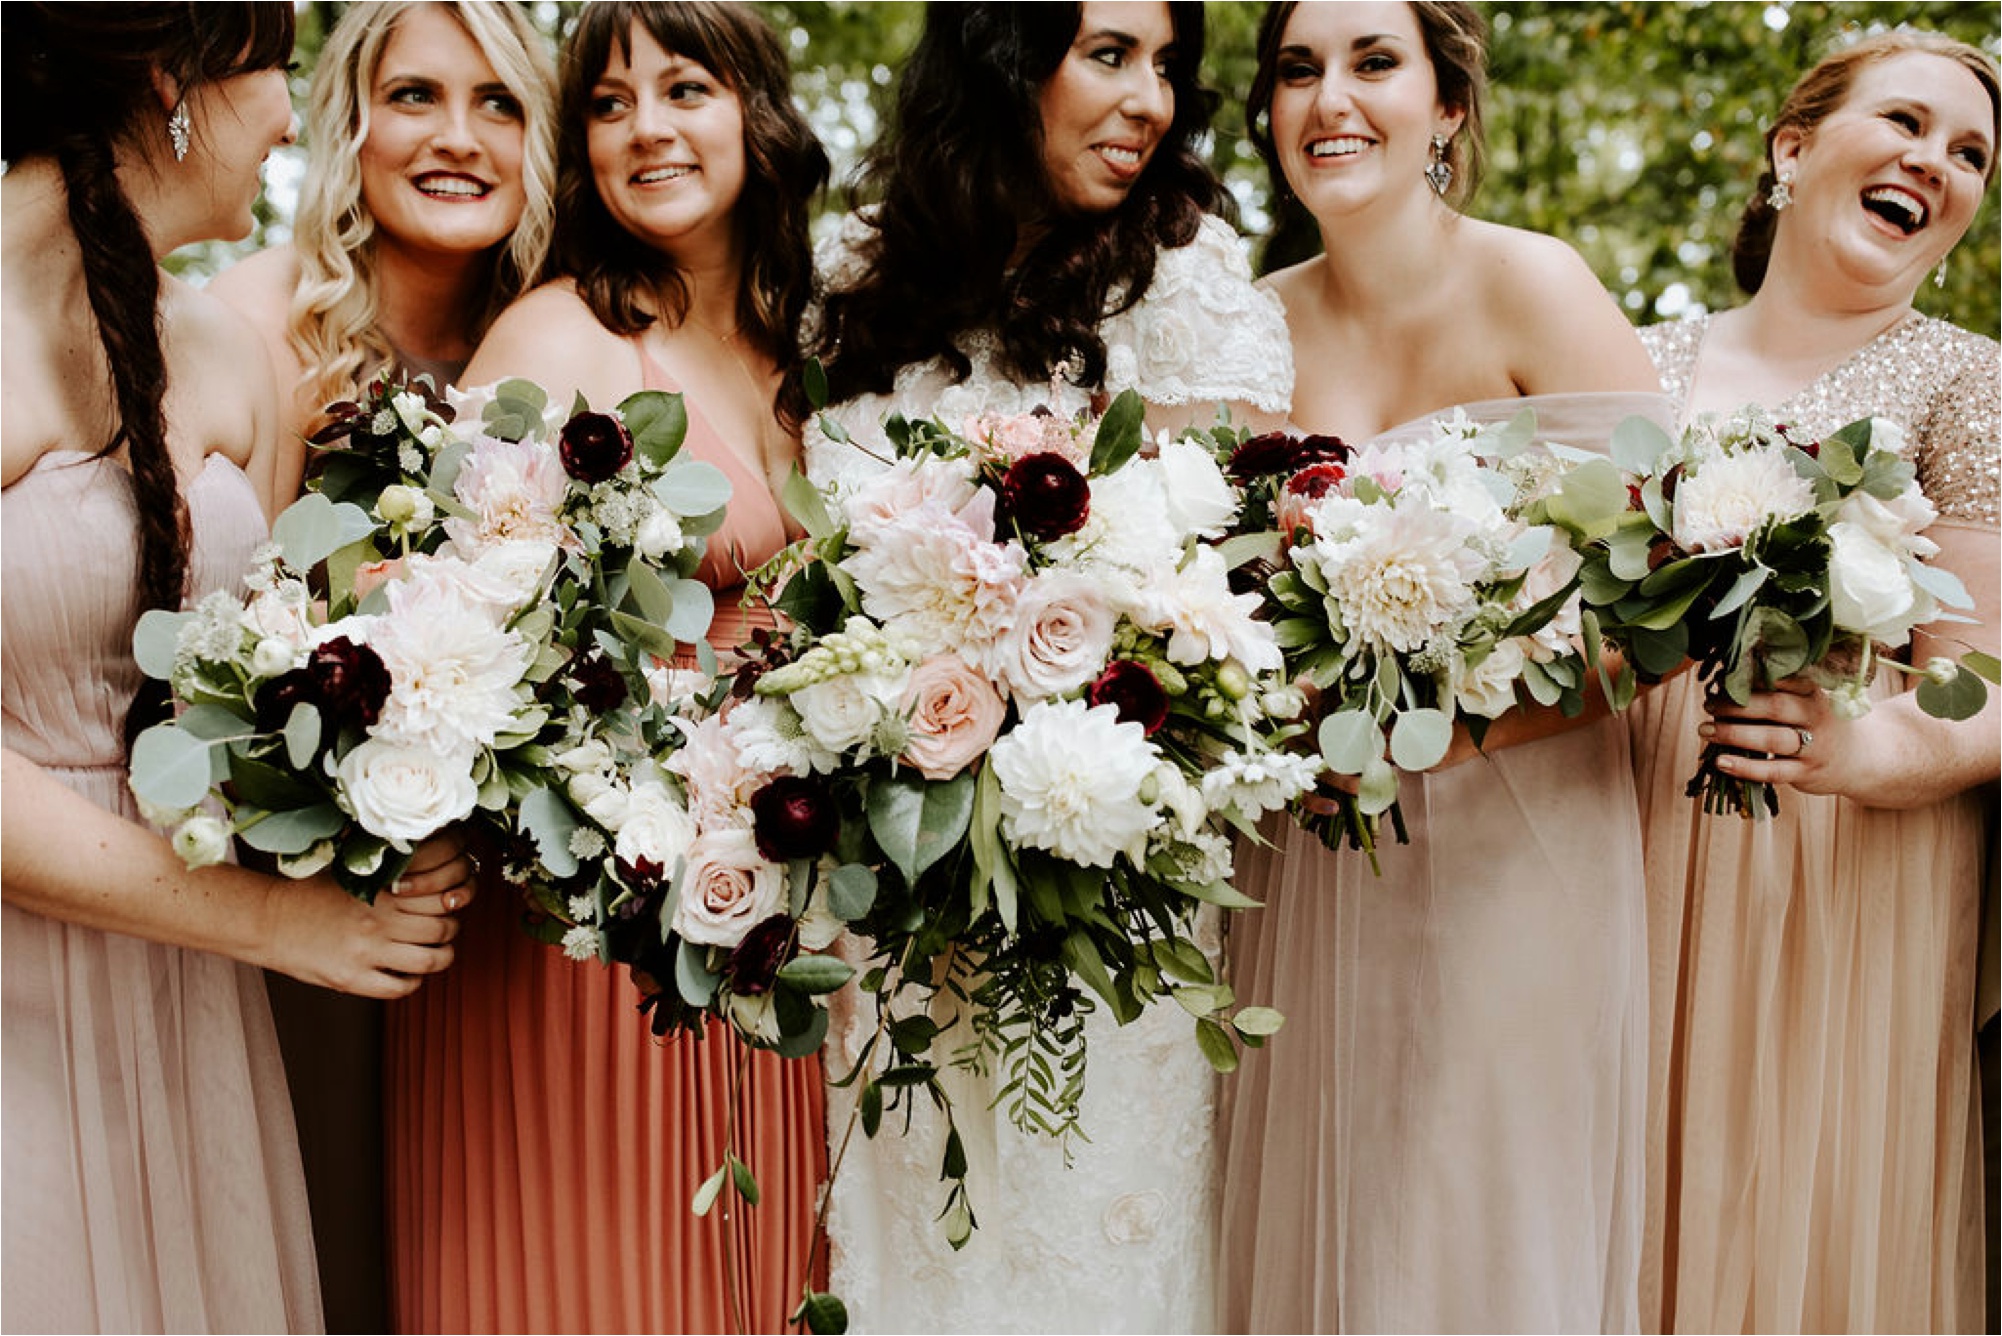  mismatched bridesmaids dresses wisconsin wedding photographer  